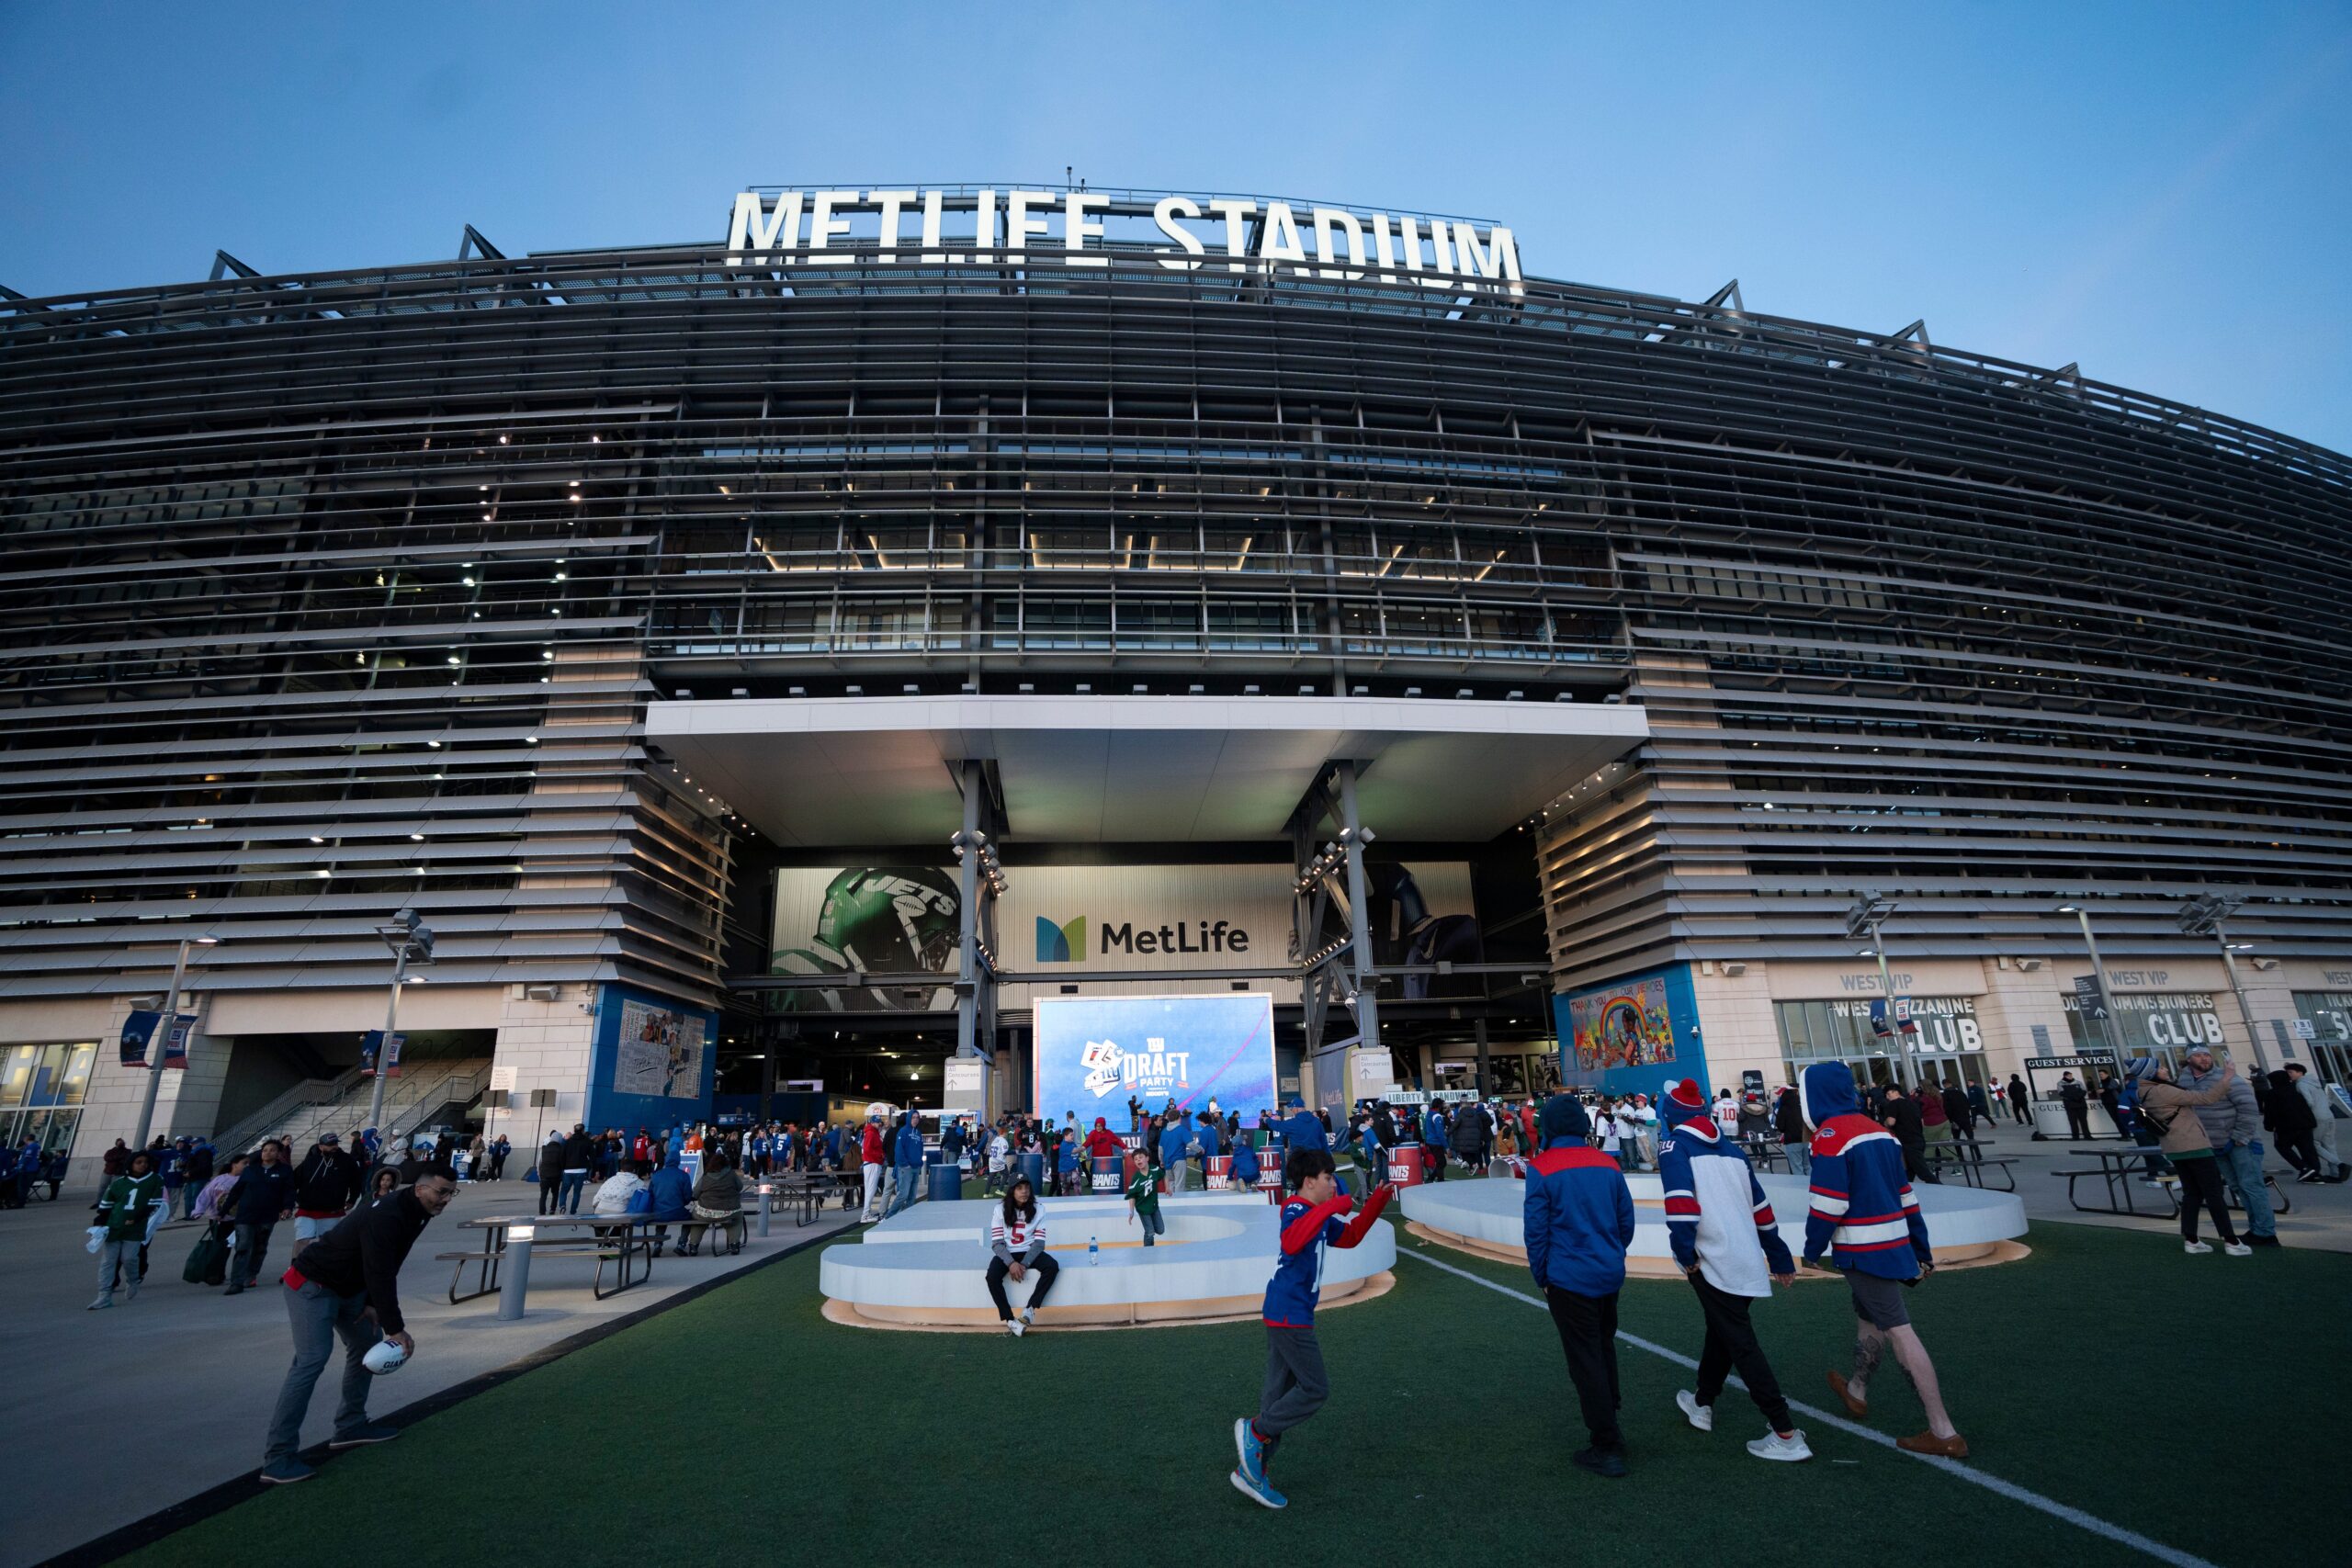 The NY Giants and NY Jets draft party at MetLife Stadium.